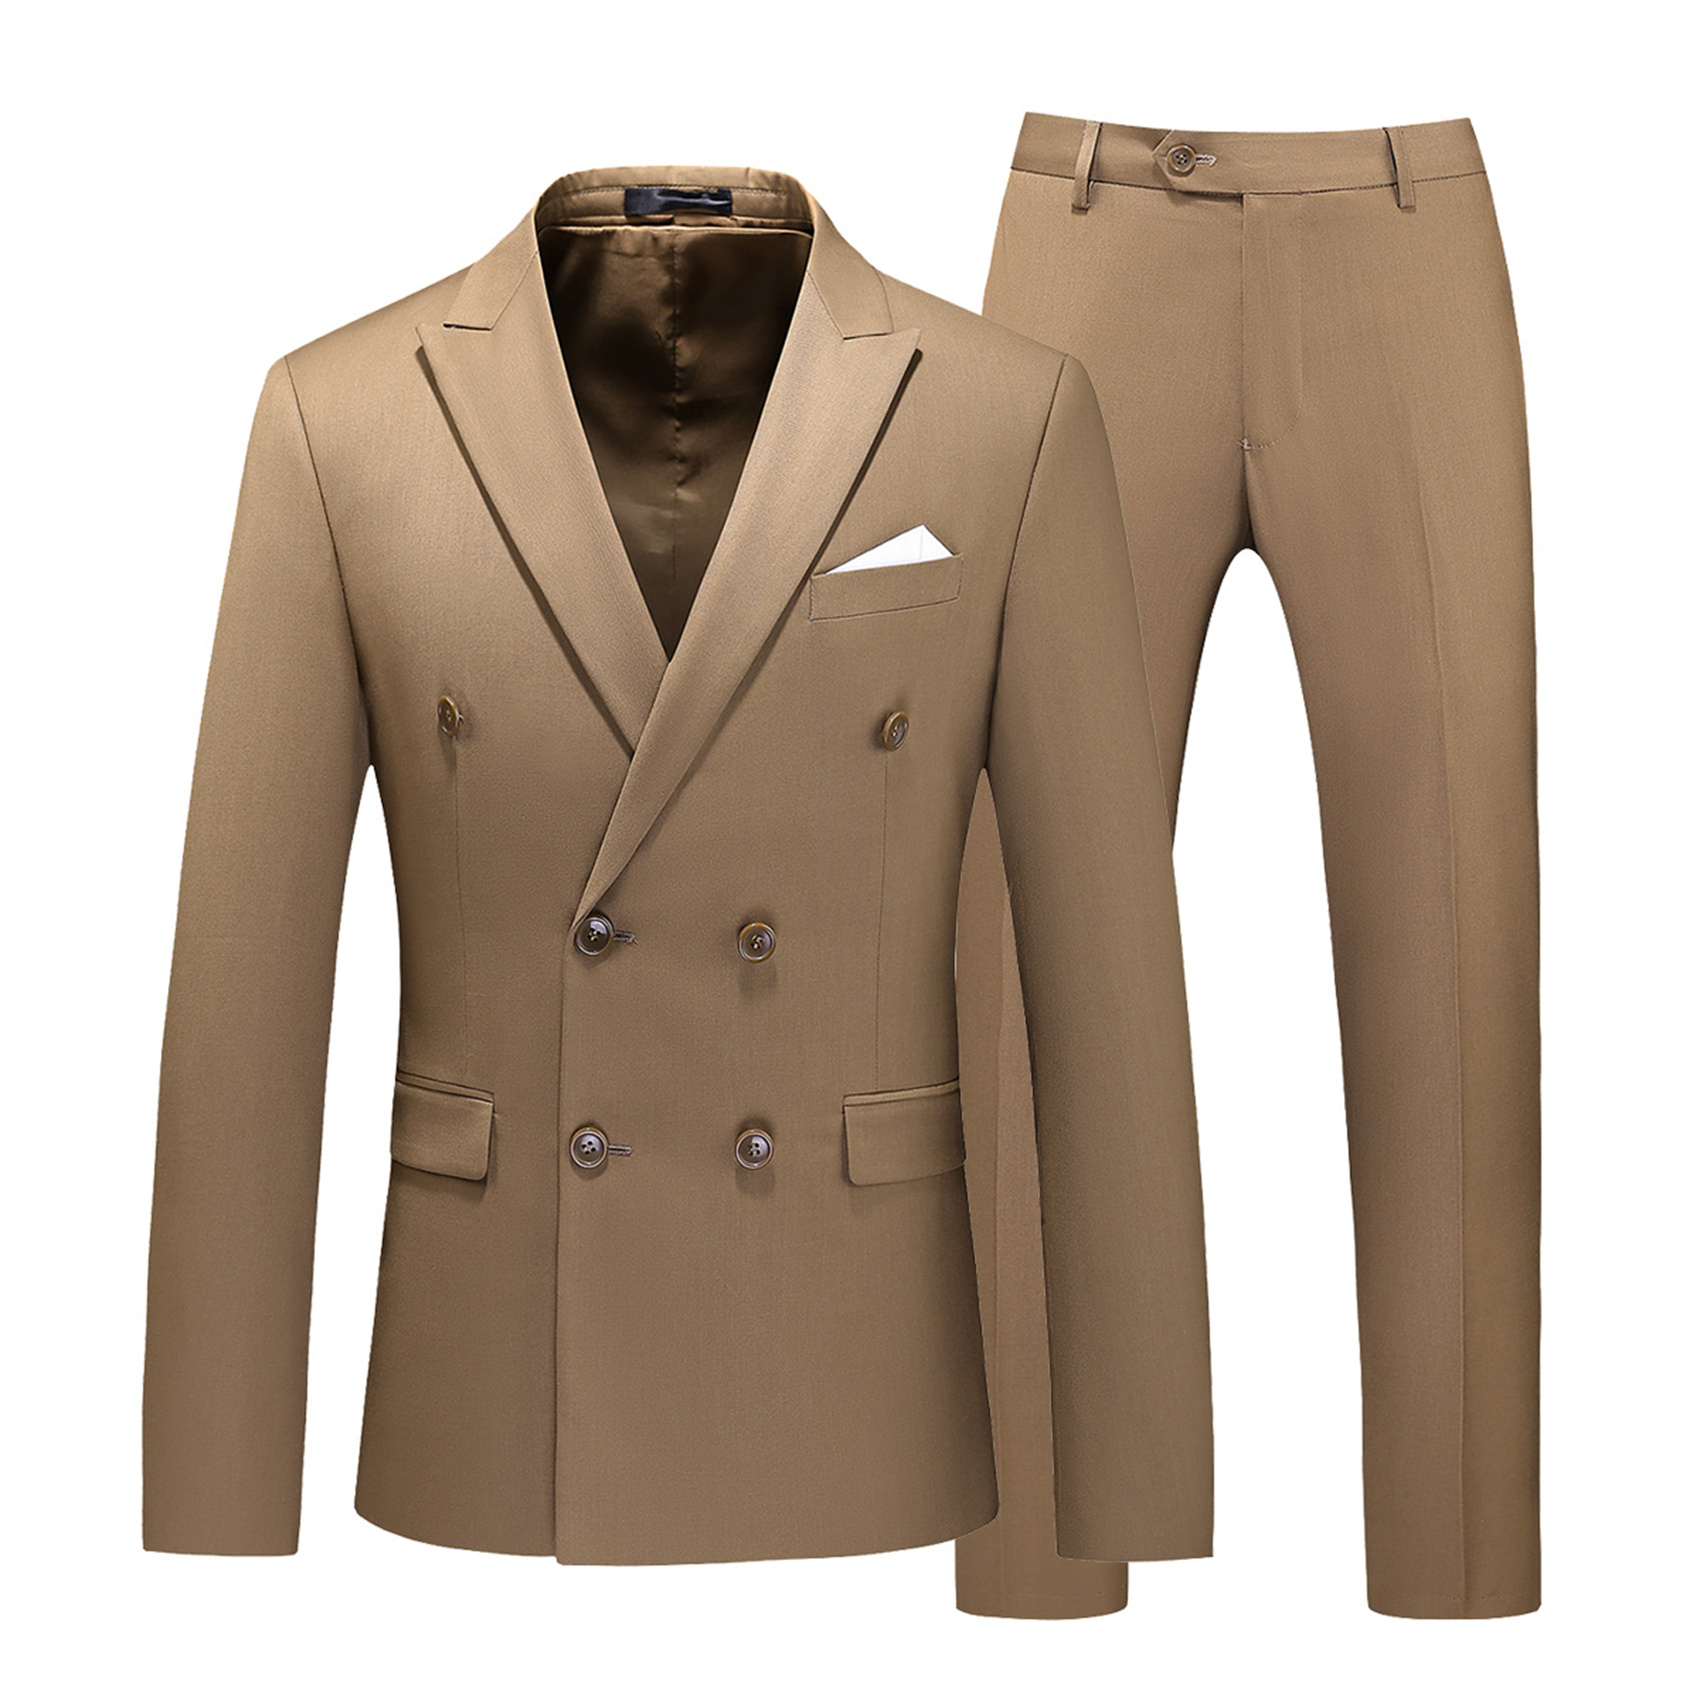 2 Piece Double Breasted Suit for Men, Slim Fit, Khaki